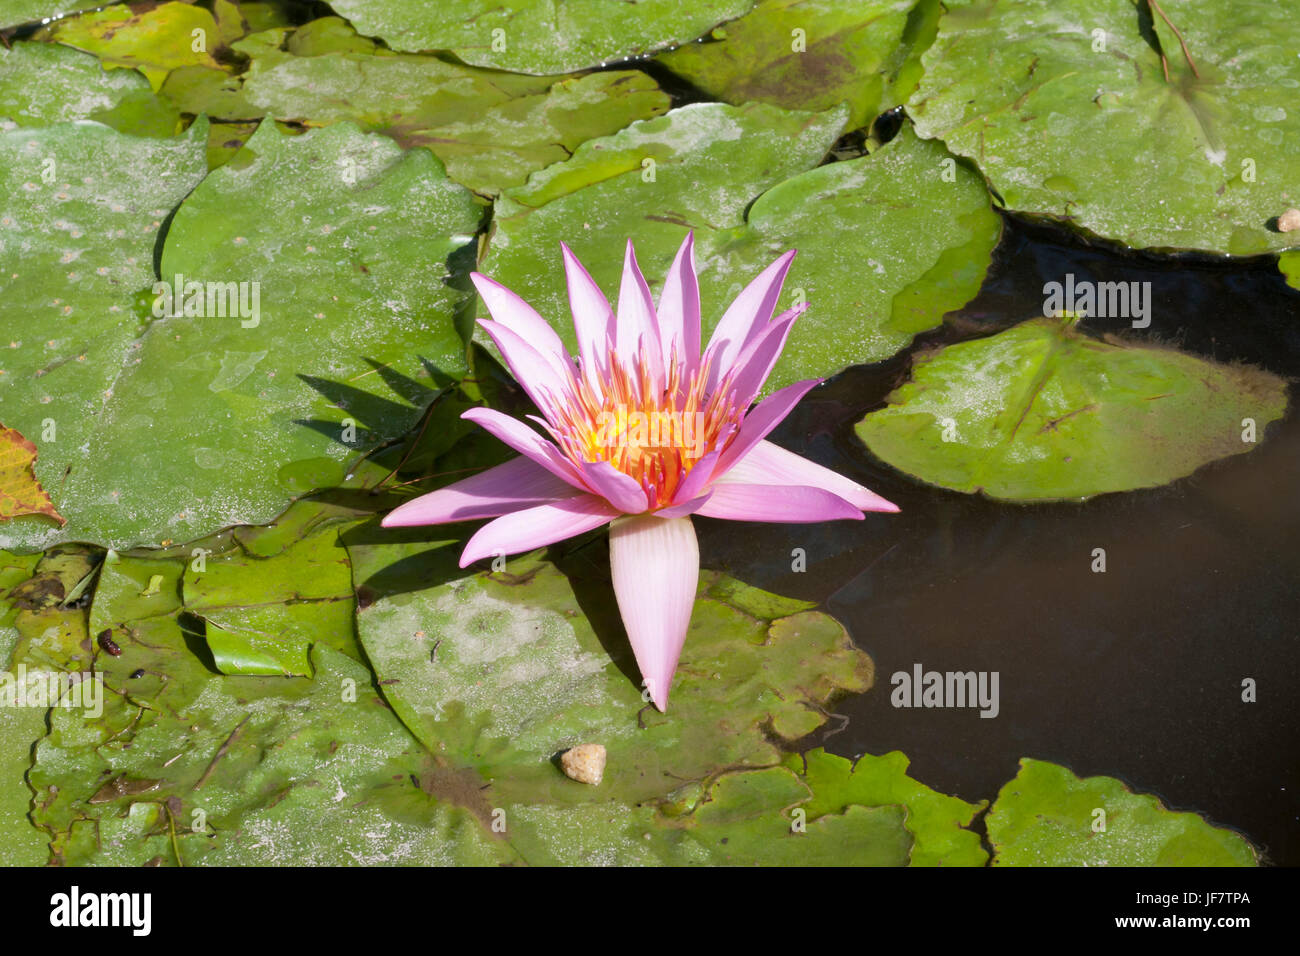 Rosa nenúfar flotando en un estanque. Flor de Loto, nymphaea Foto de stock